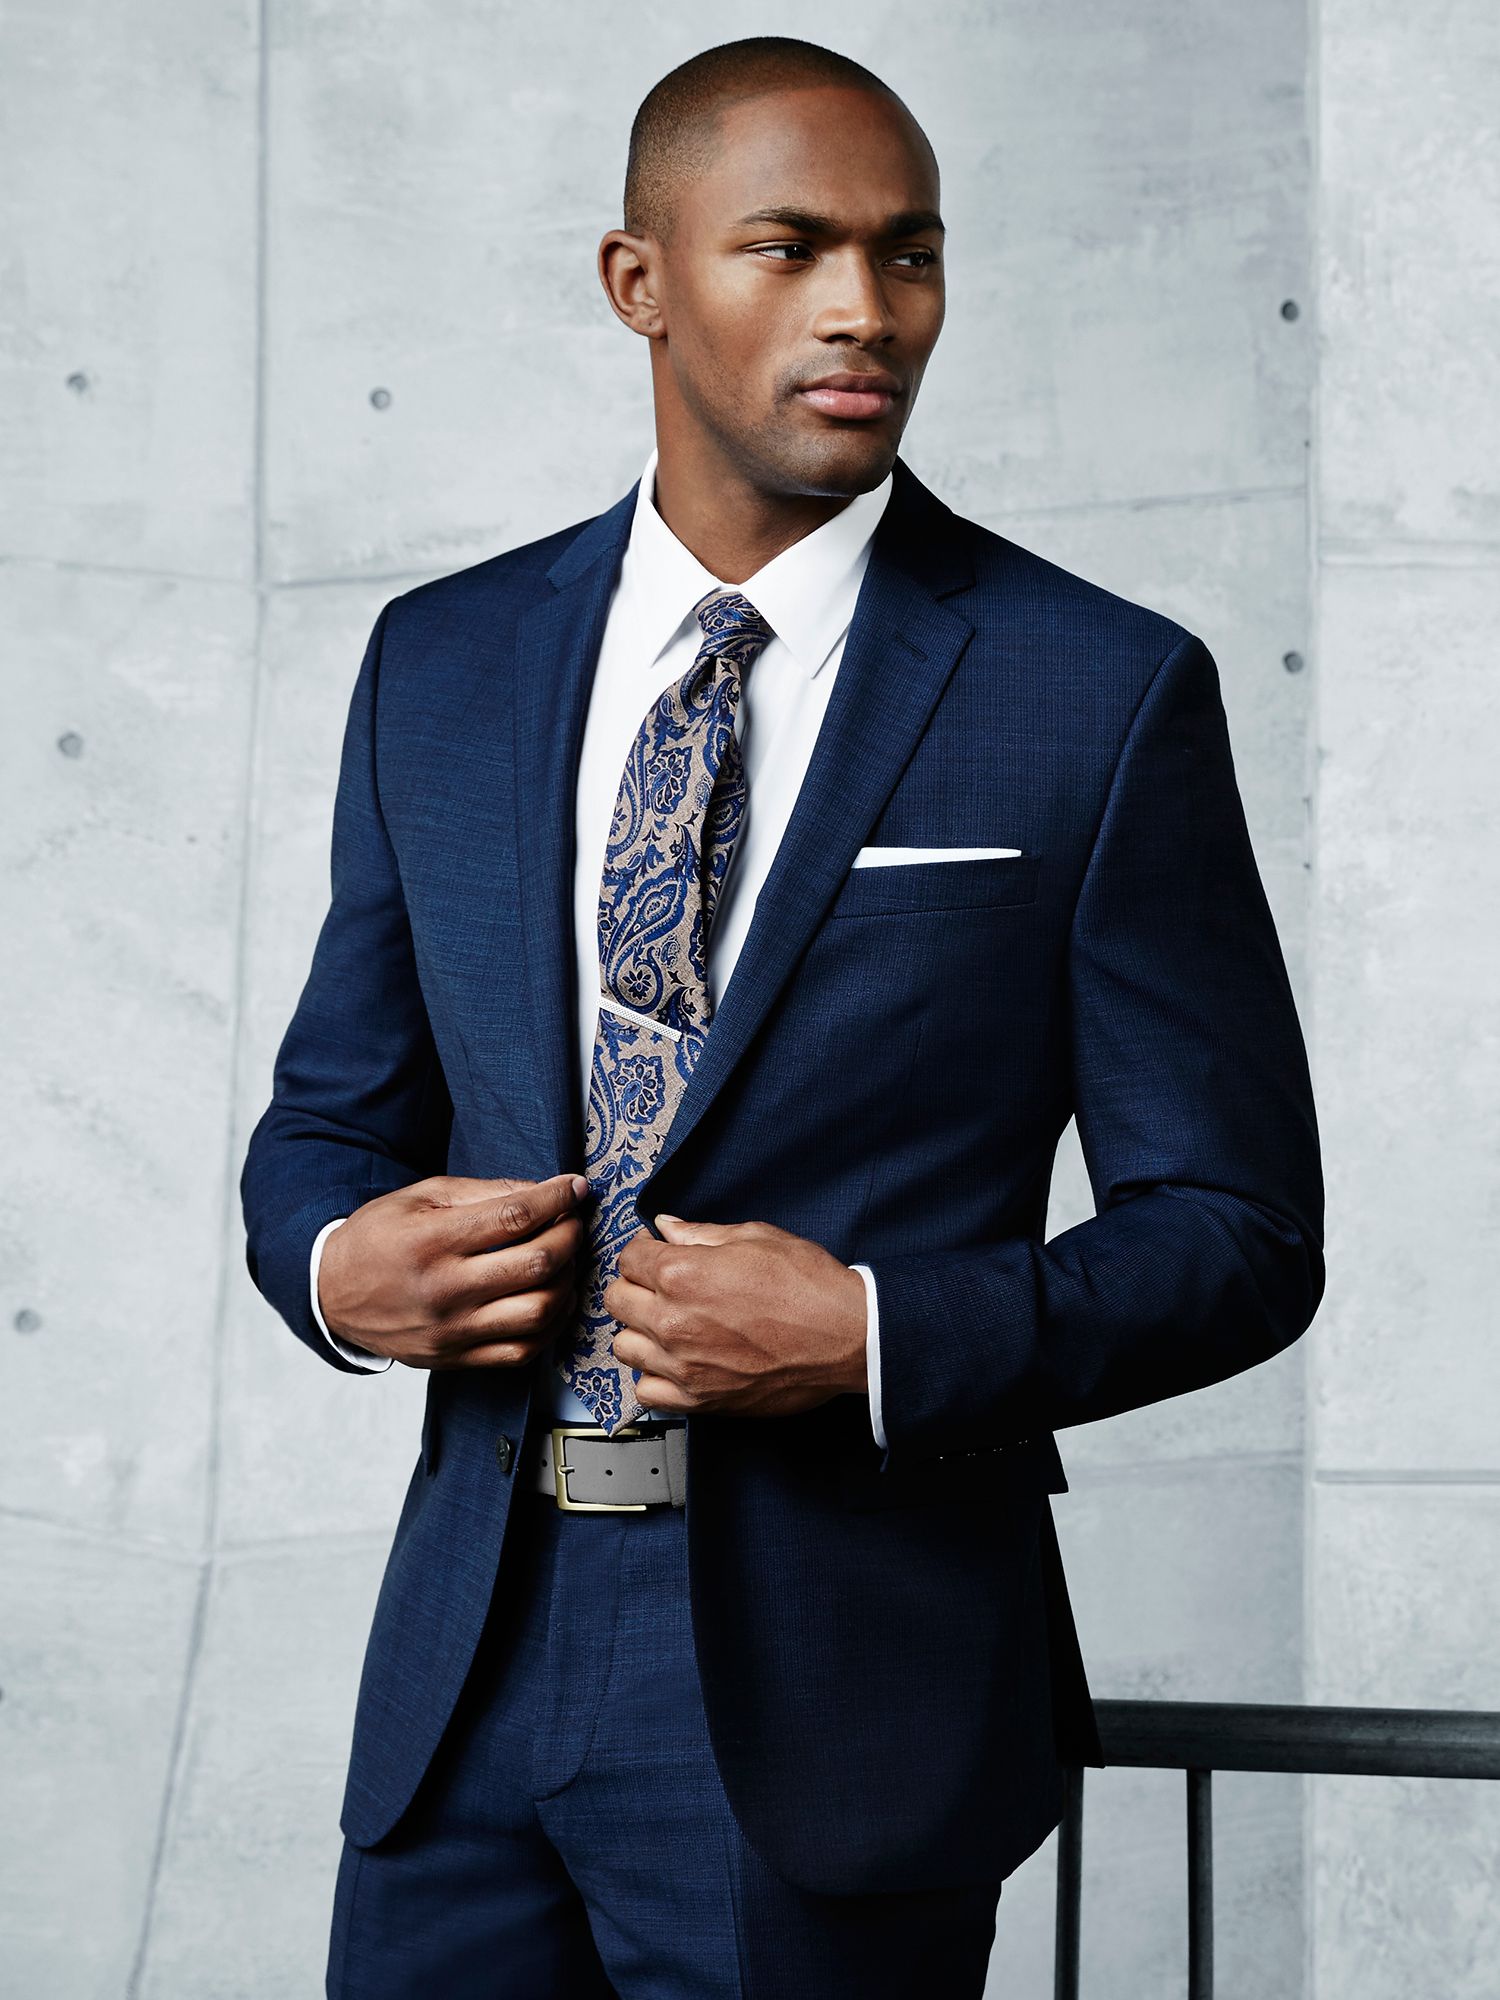 Pre-Styled Looks - Men's Suits | Men's Wearhouse